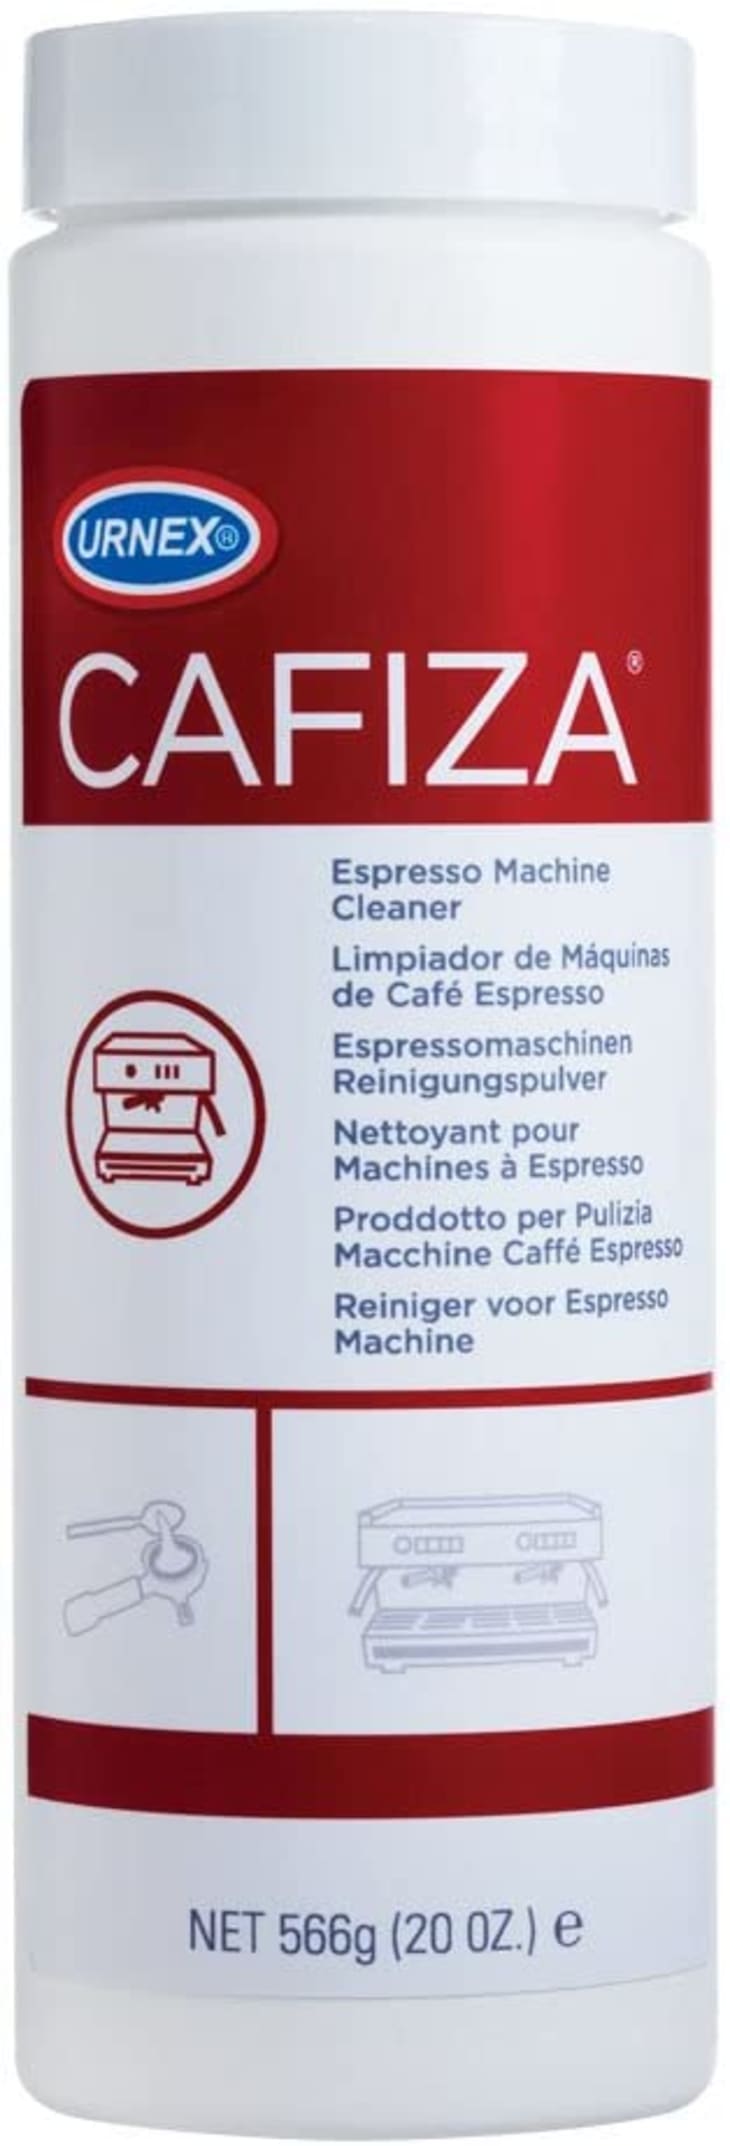 Product Image: Cafiza Professional Espresso Machine Cleaner